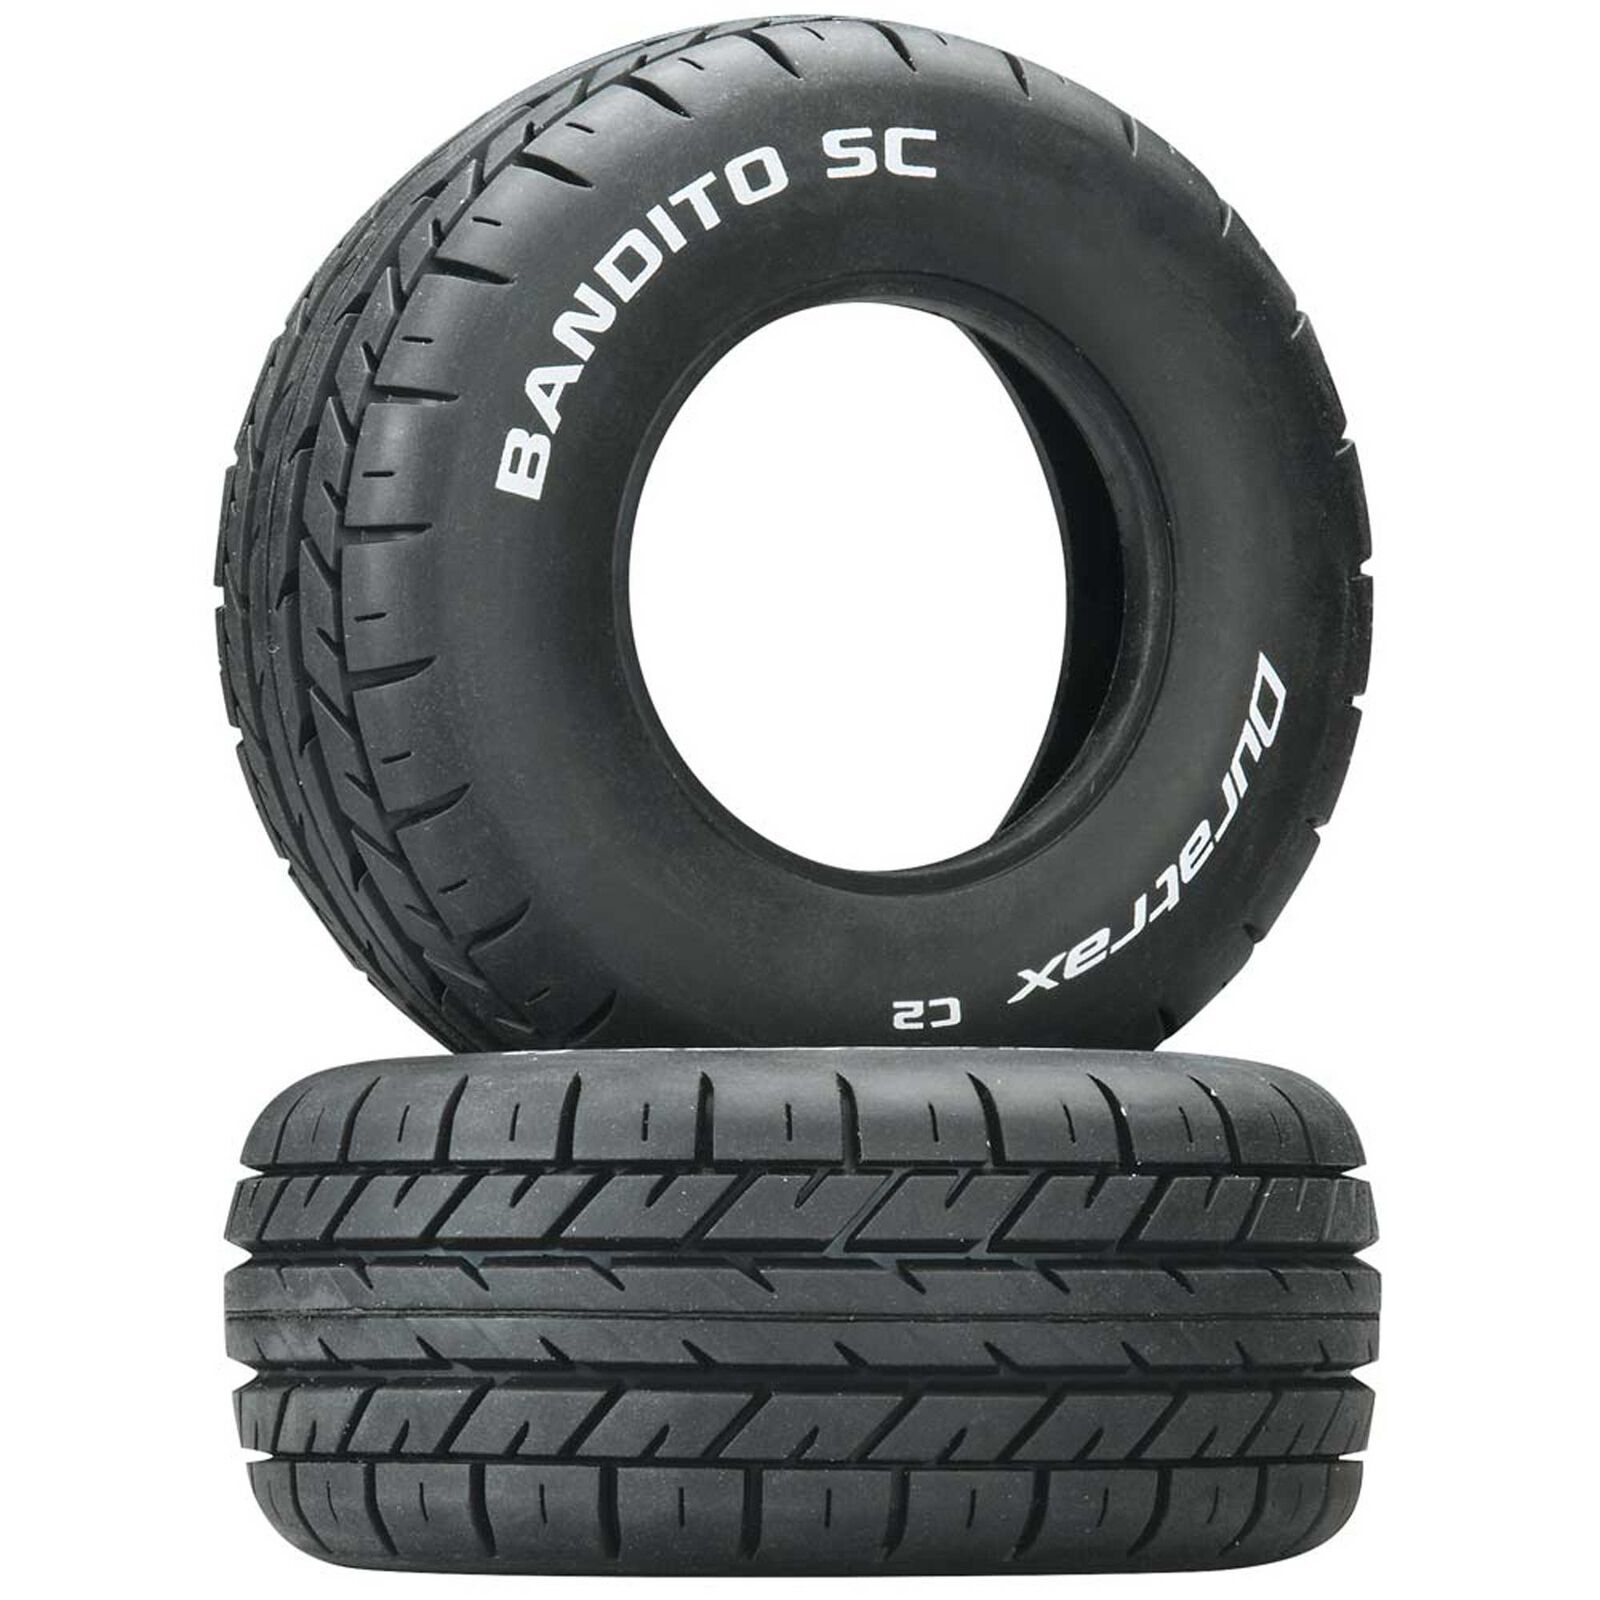 Bandito SC On-Road Tires C2 (2)